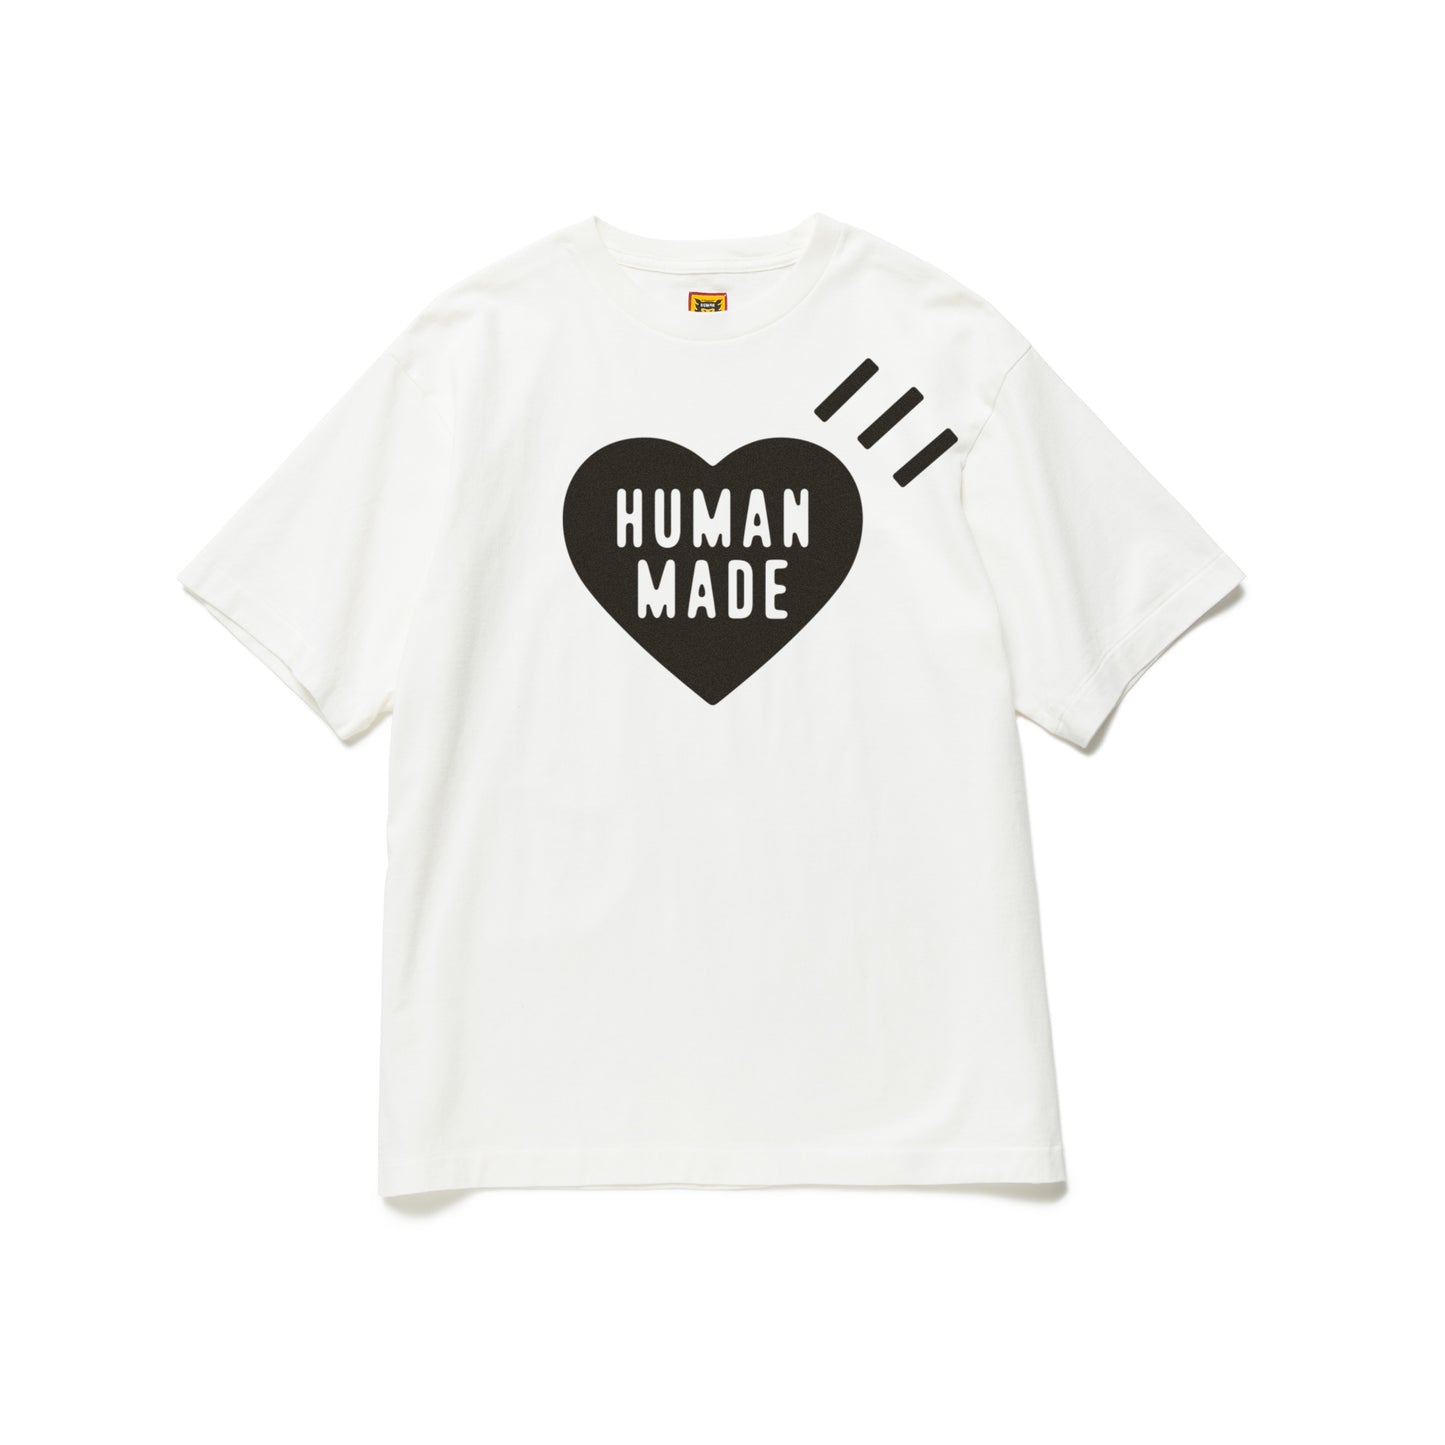 HUMAN MADEシャツ - シャツ